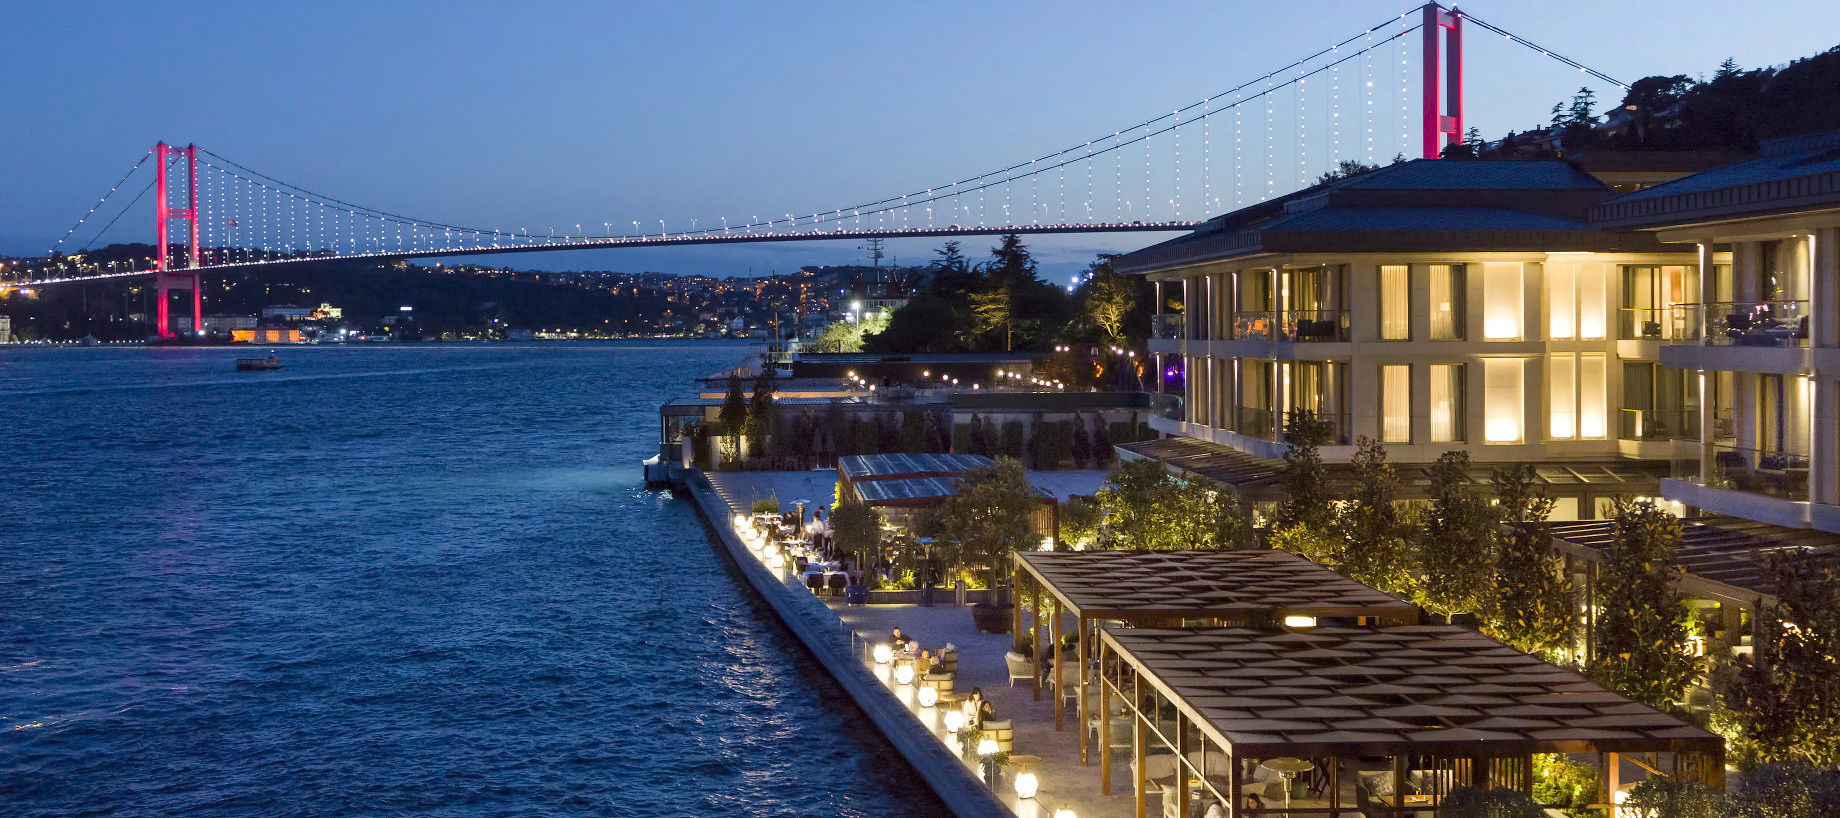 Mandarin Oriental Bosphorus, Istanbul Hotel – Istanbul, Turkey – Waterfront View Night